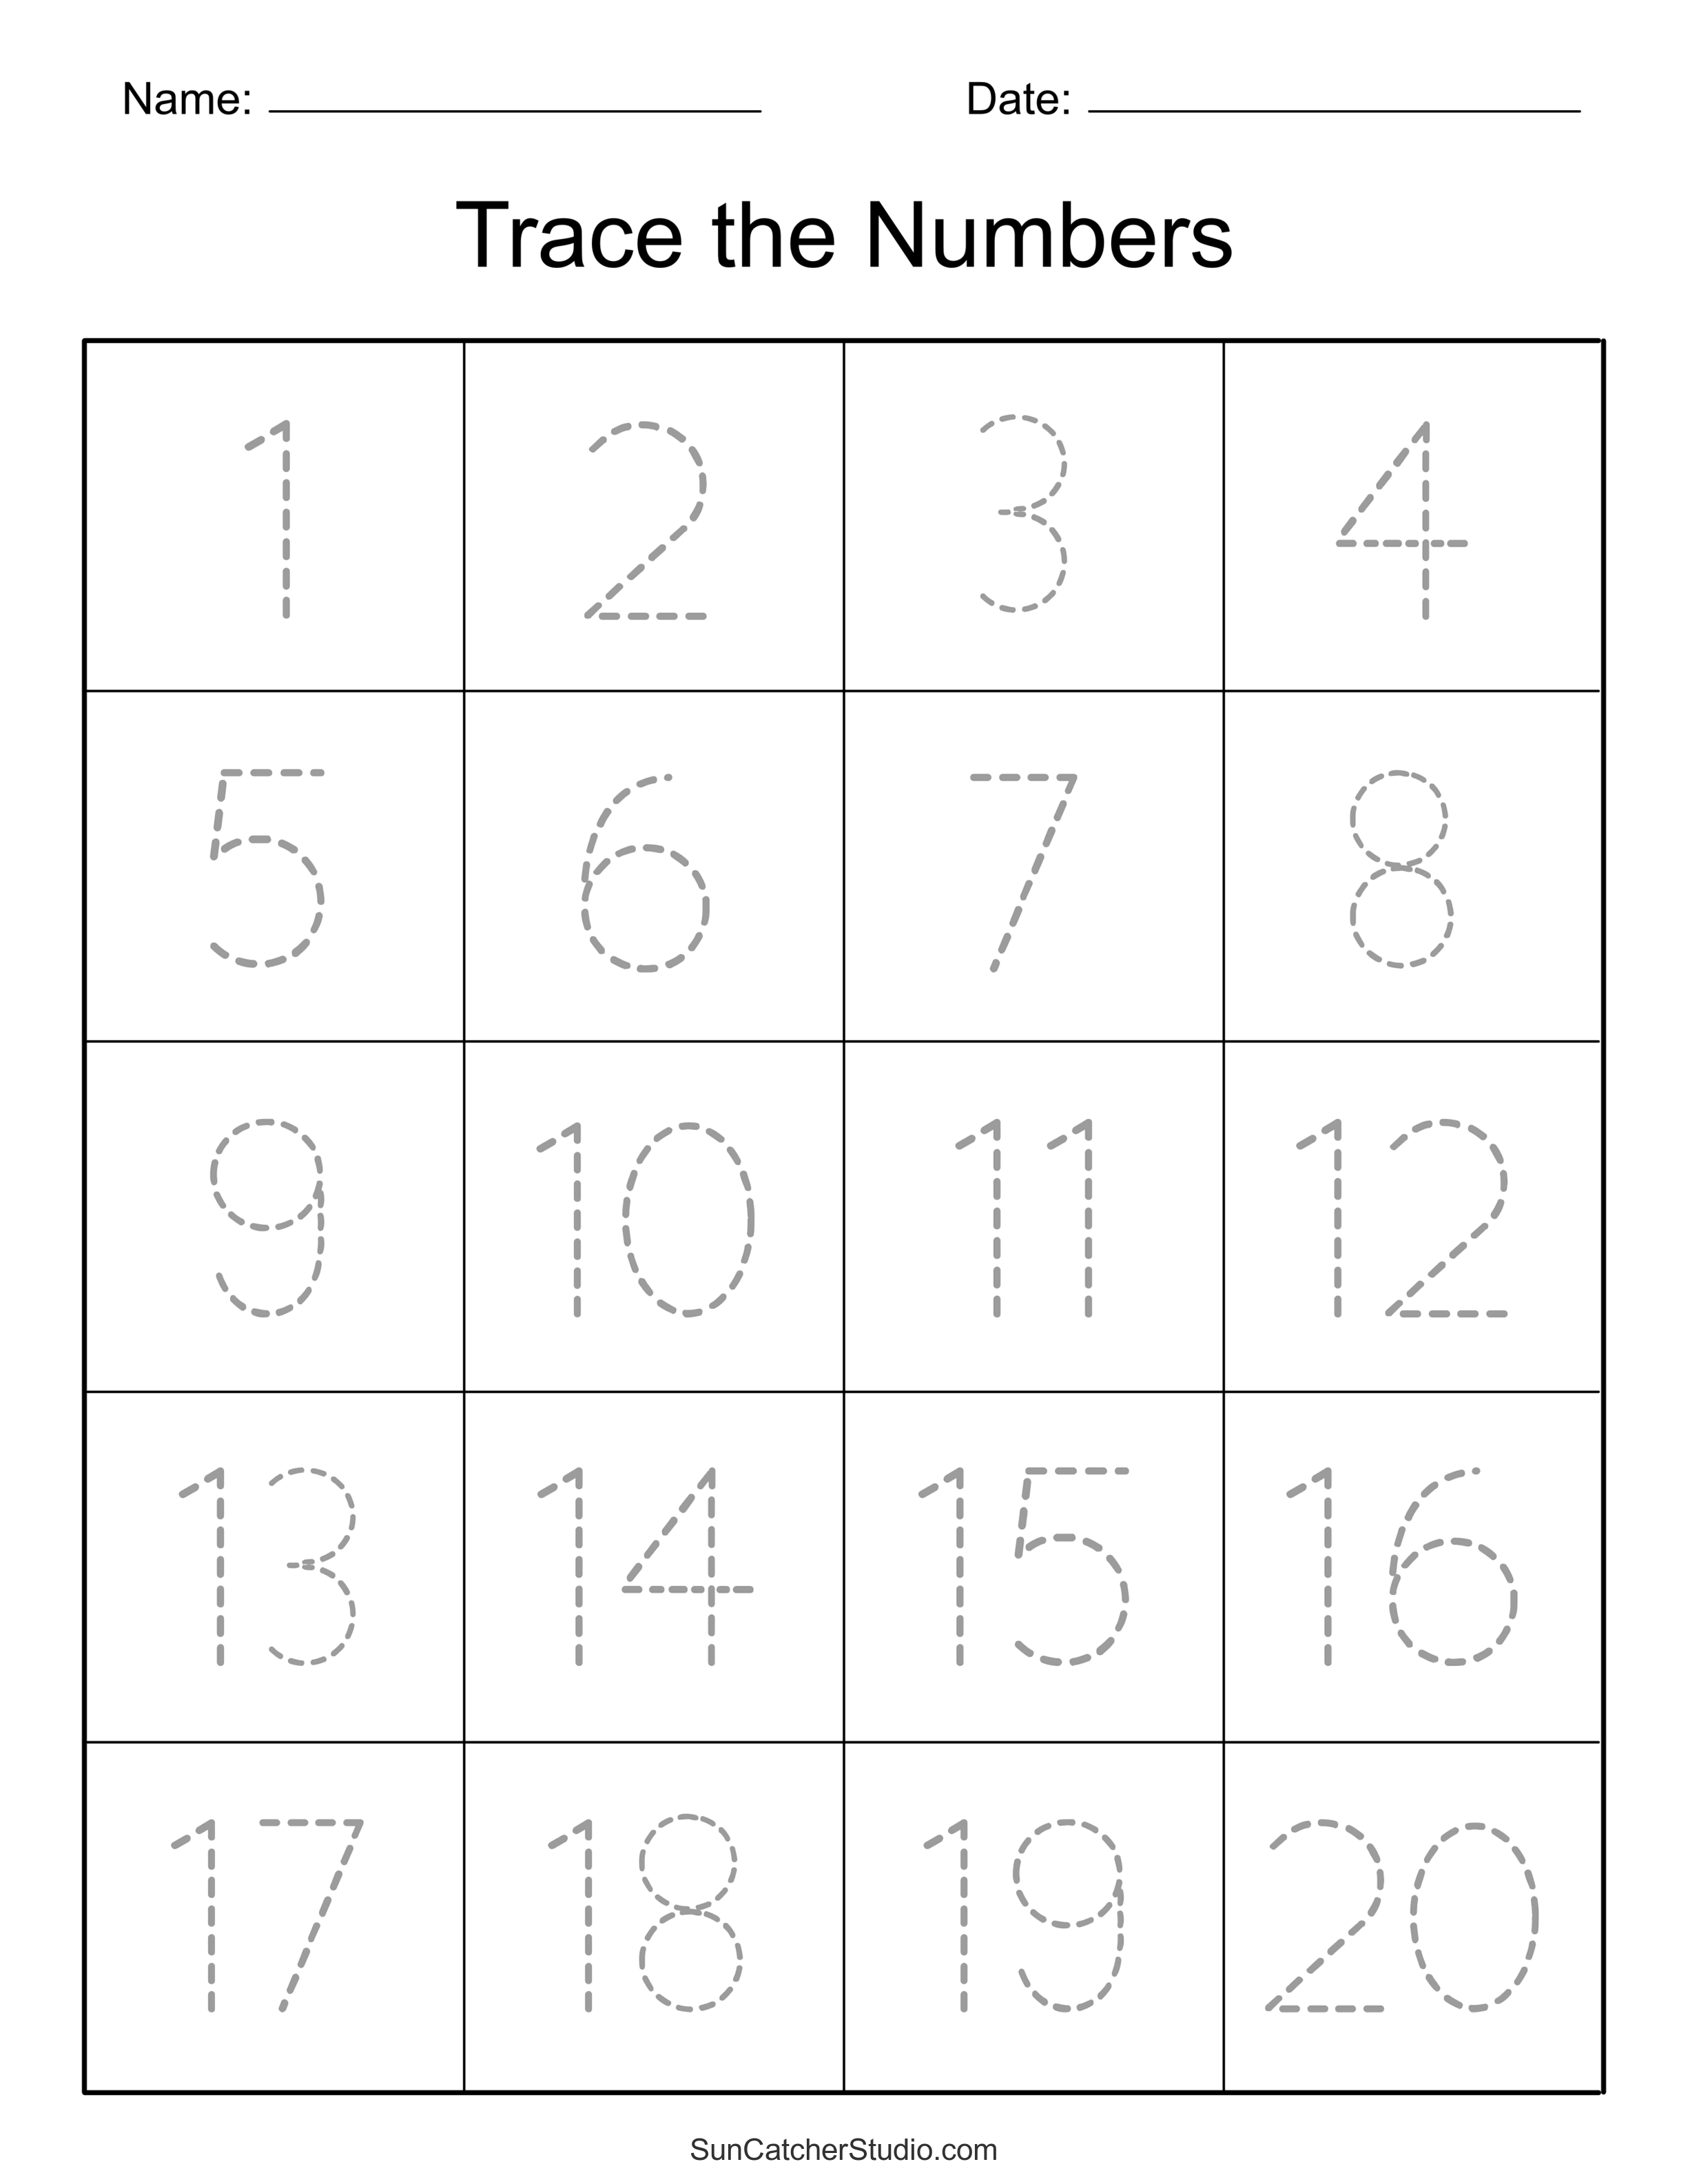 Tracing numbers free printable practice pdf worksheets â diy projects patterns monograms designs templates